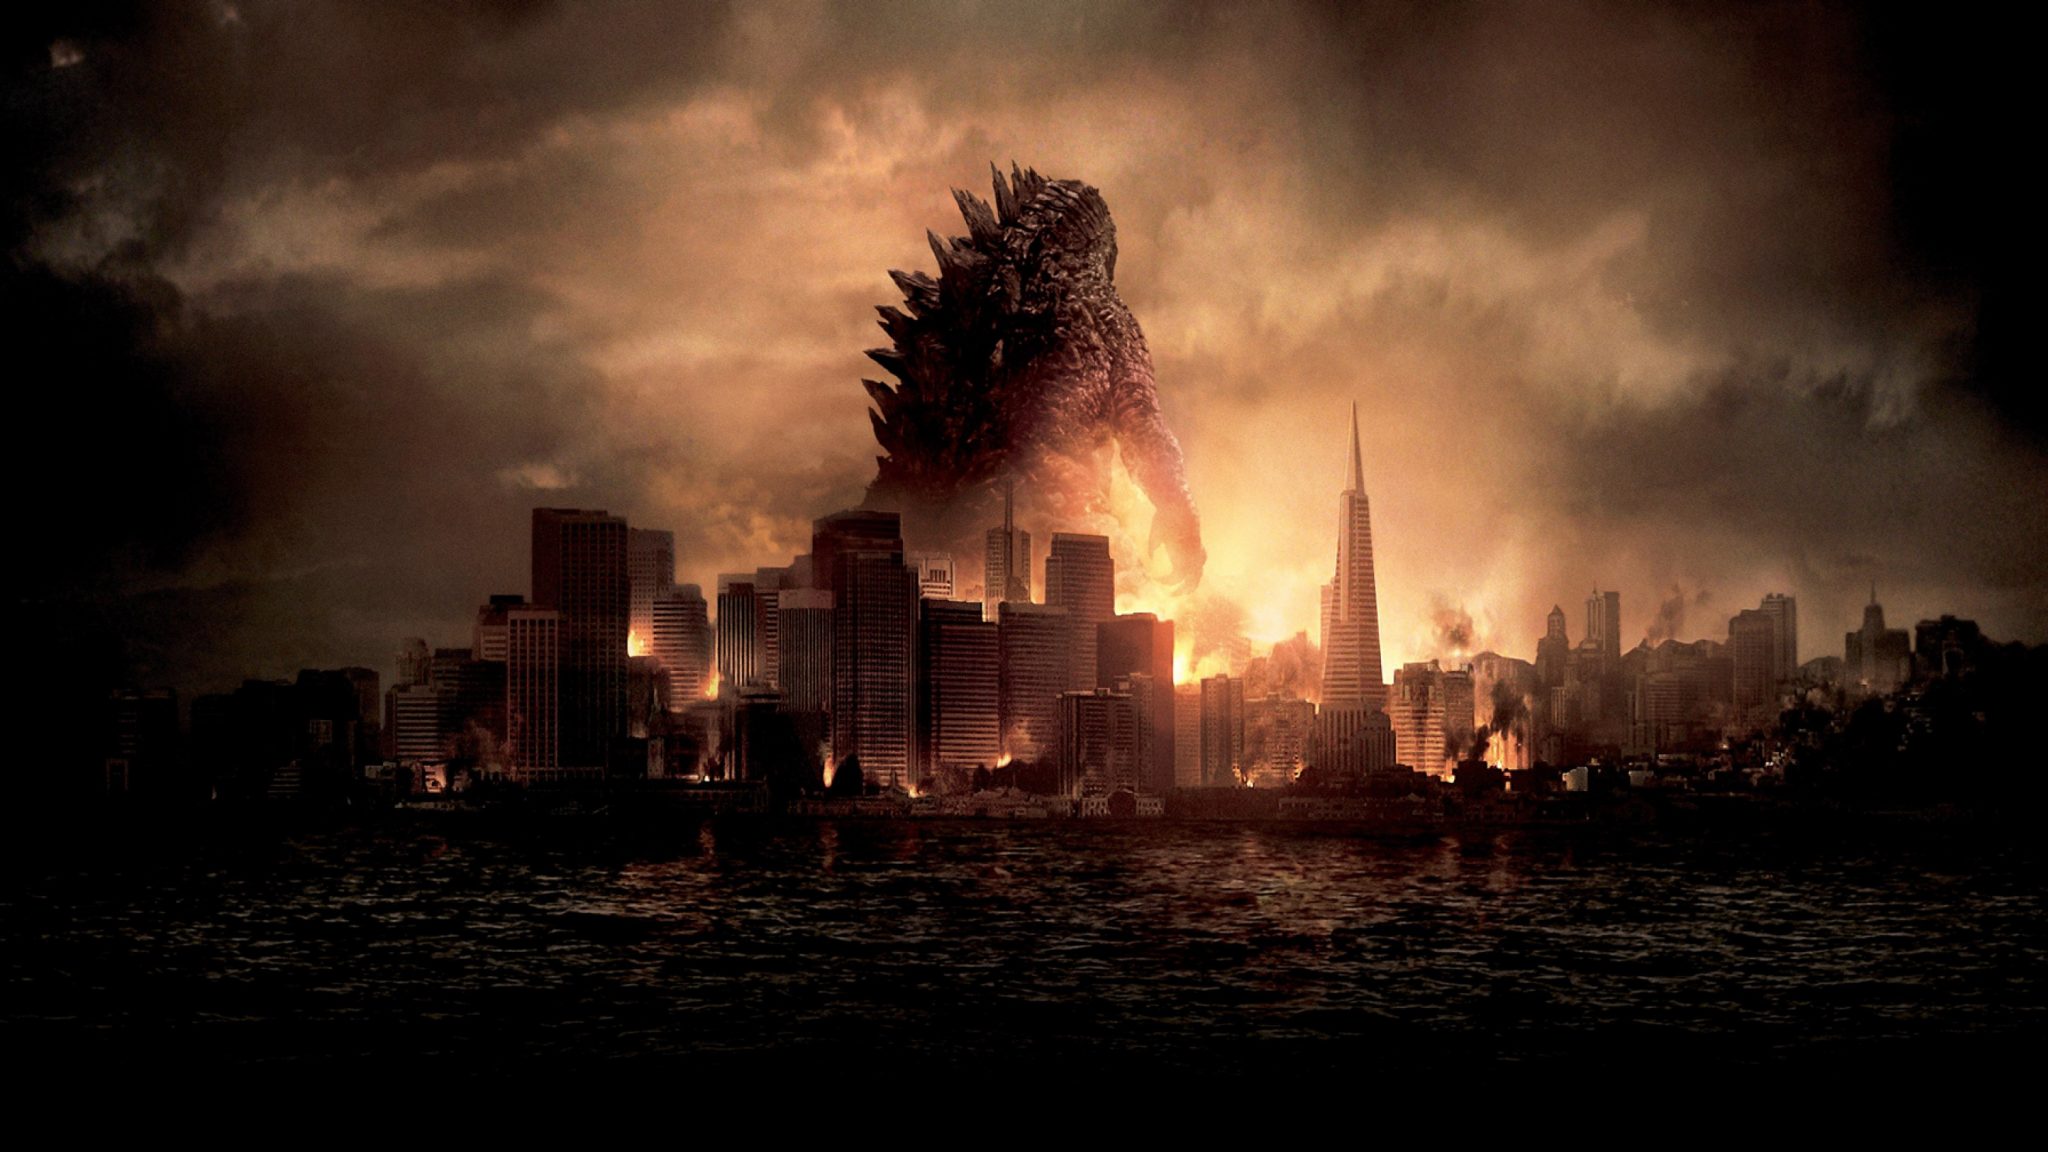 Credit: WB (Godzilla)